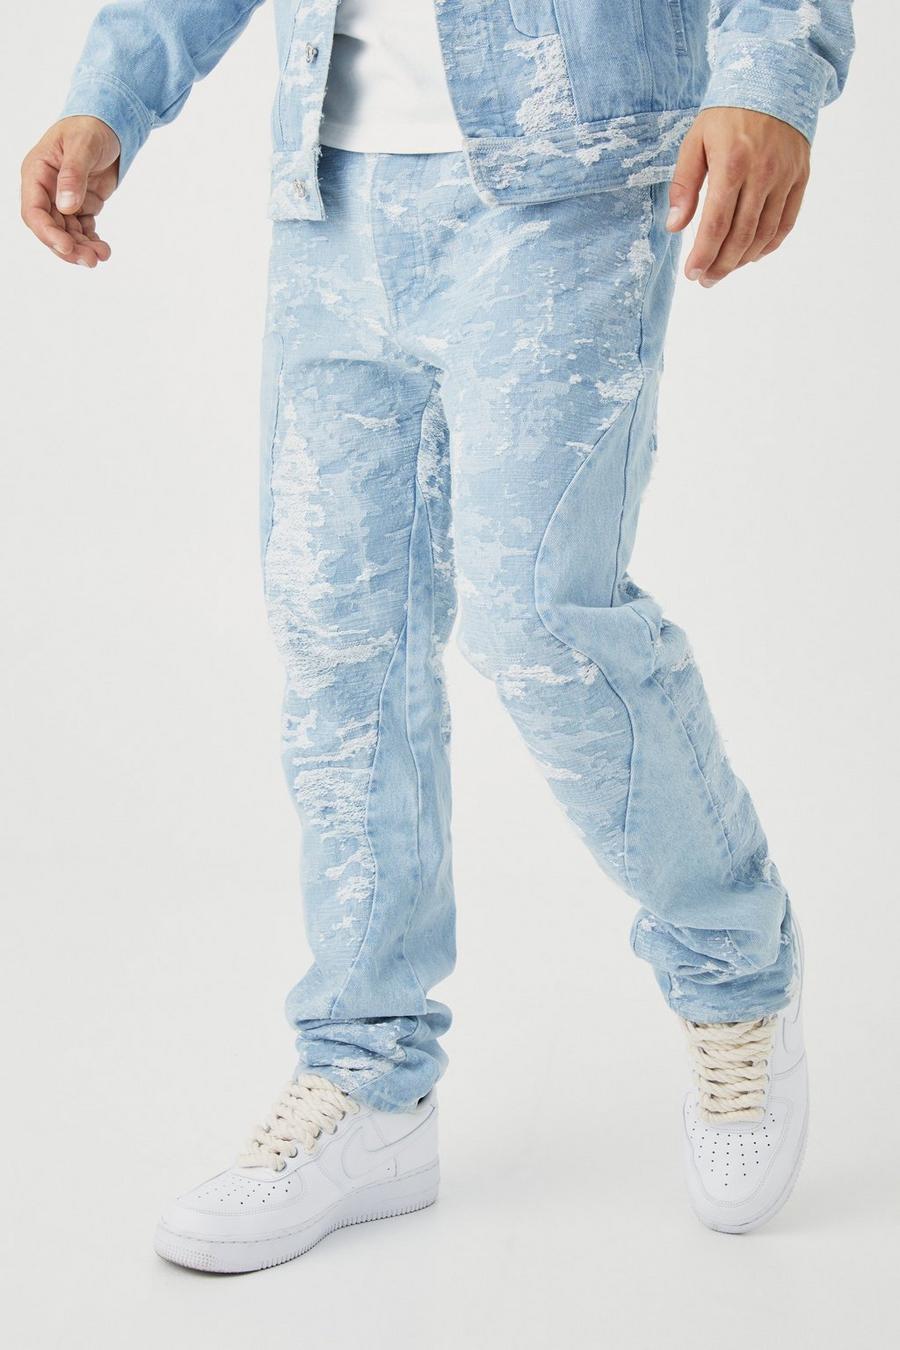 Gespleißte Jacquard Jeans mit geradem Bein, Light blue